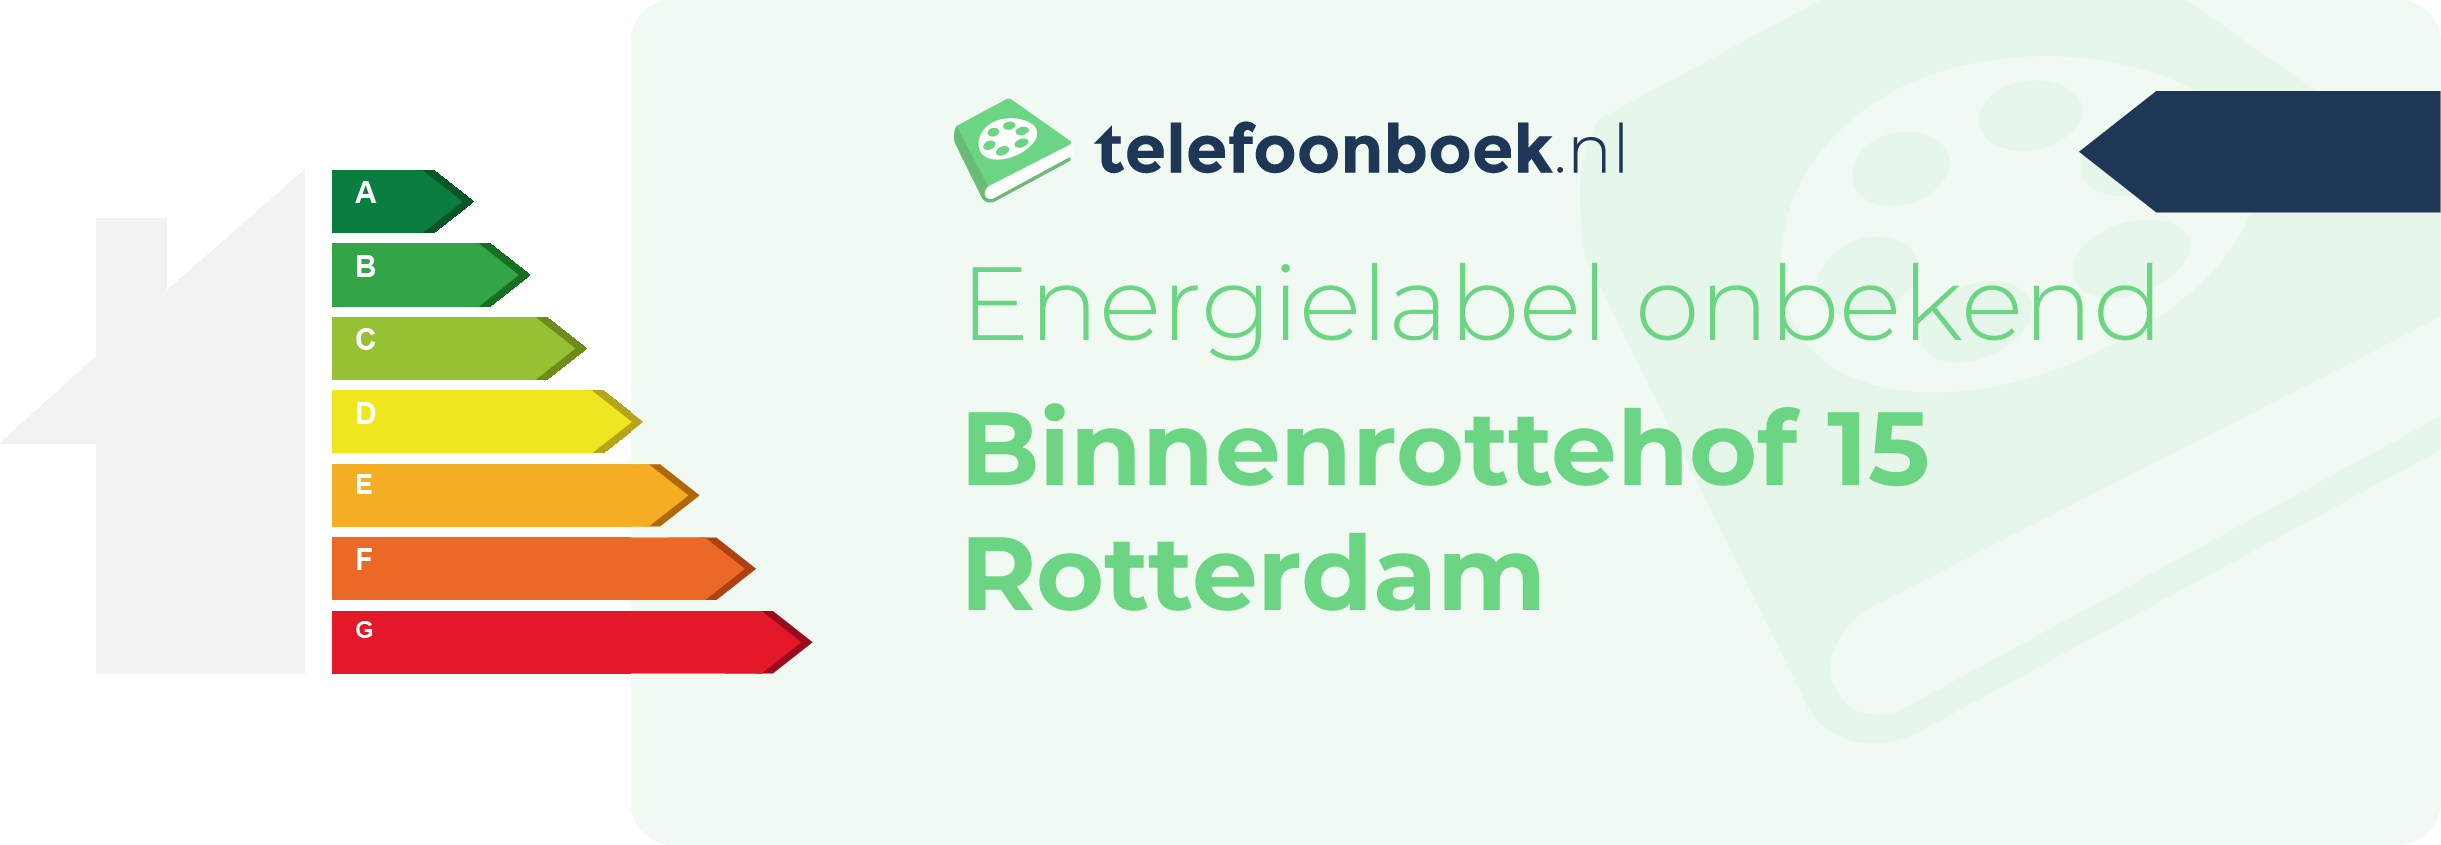 Energielabel Binnenrottehof 15 Rotterdam